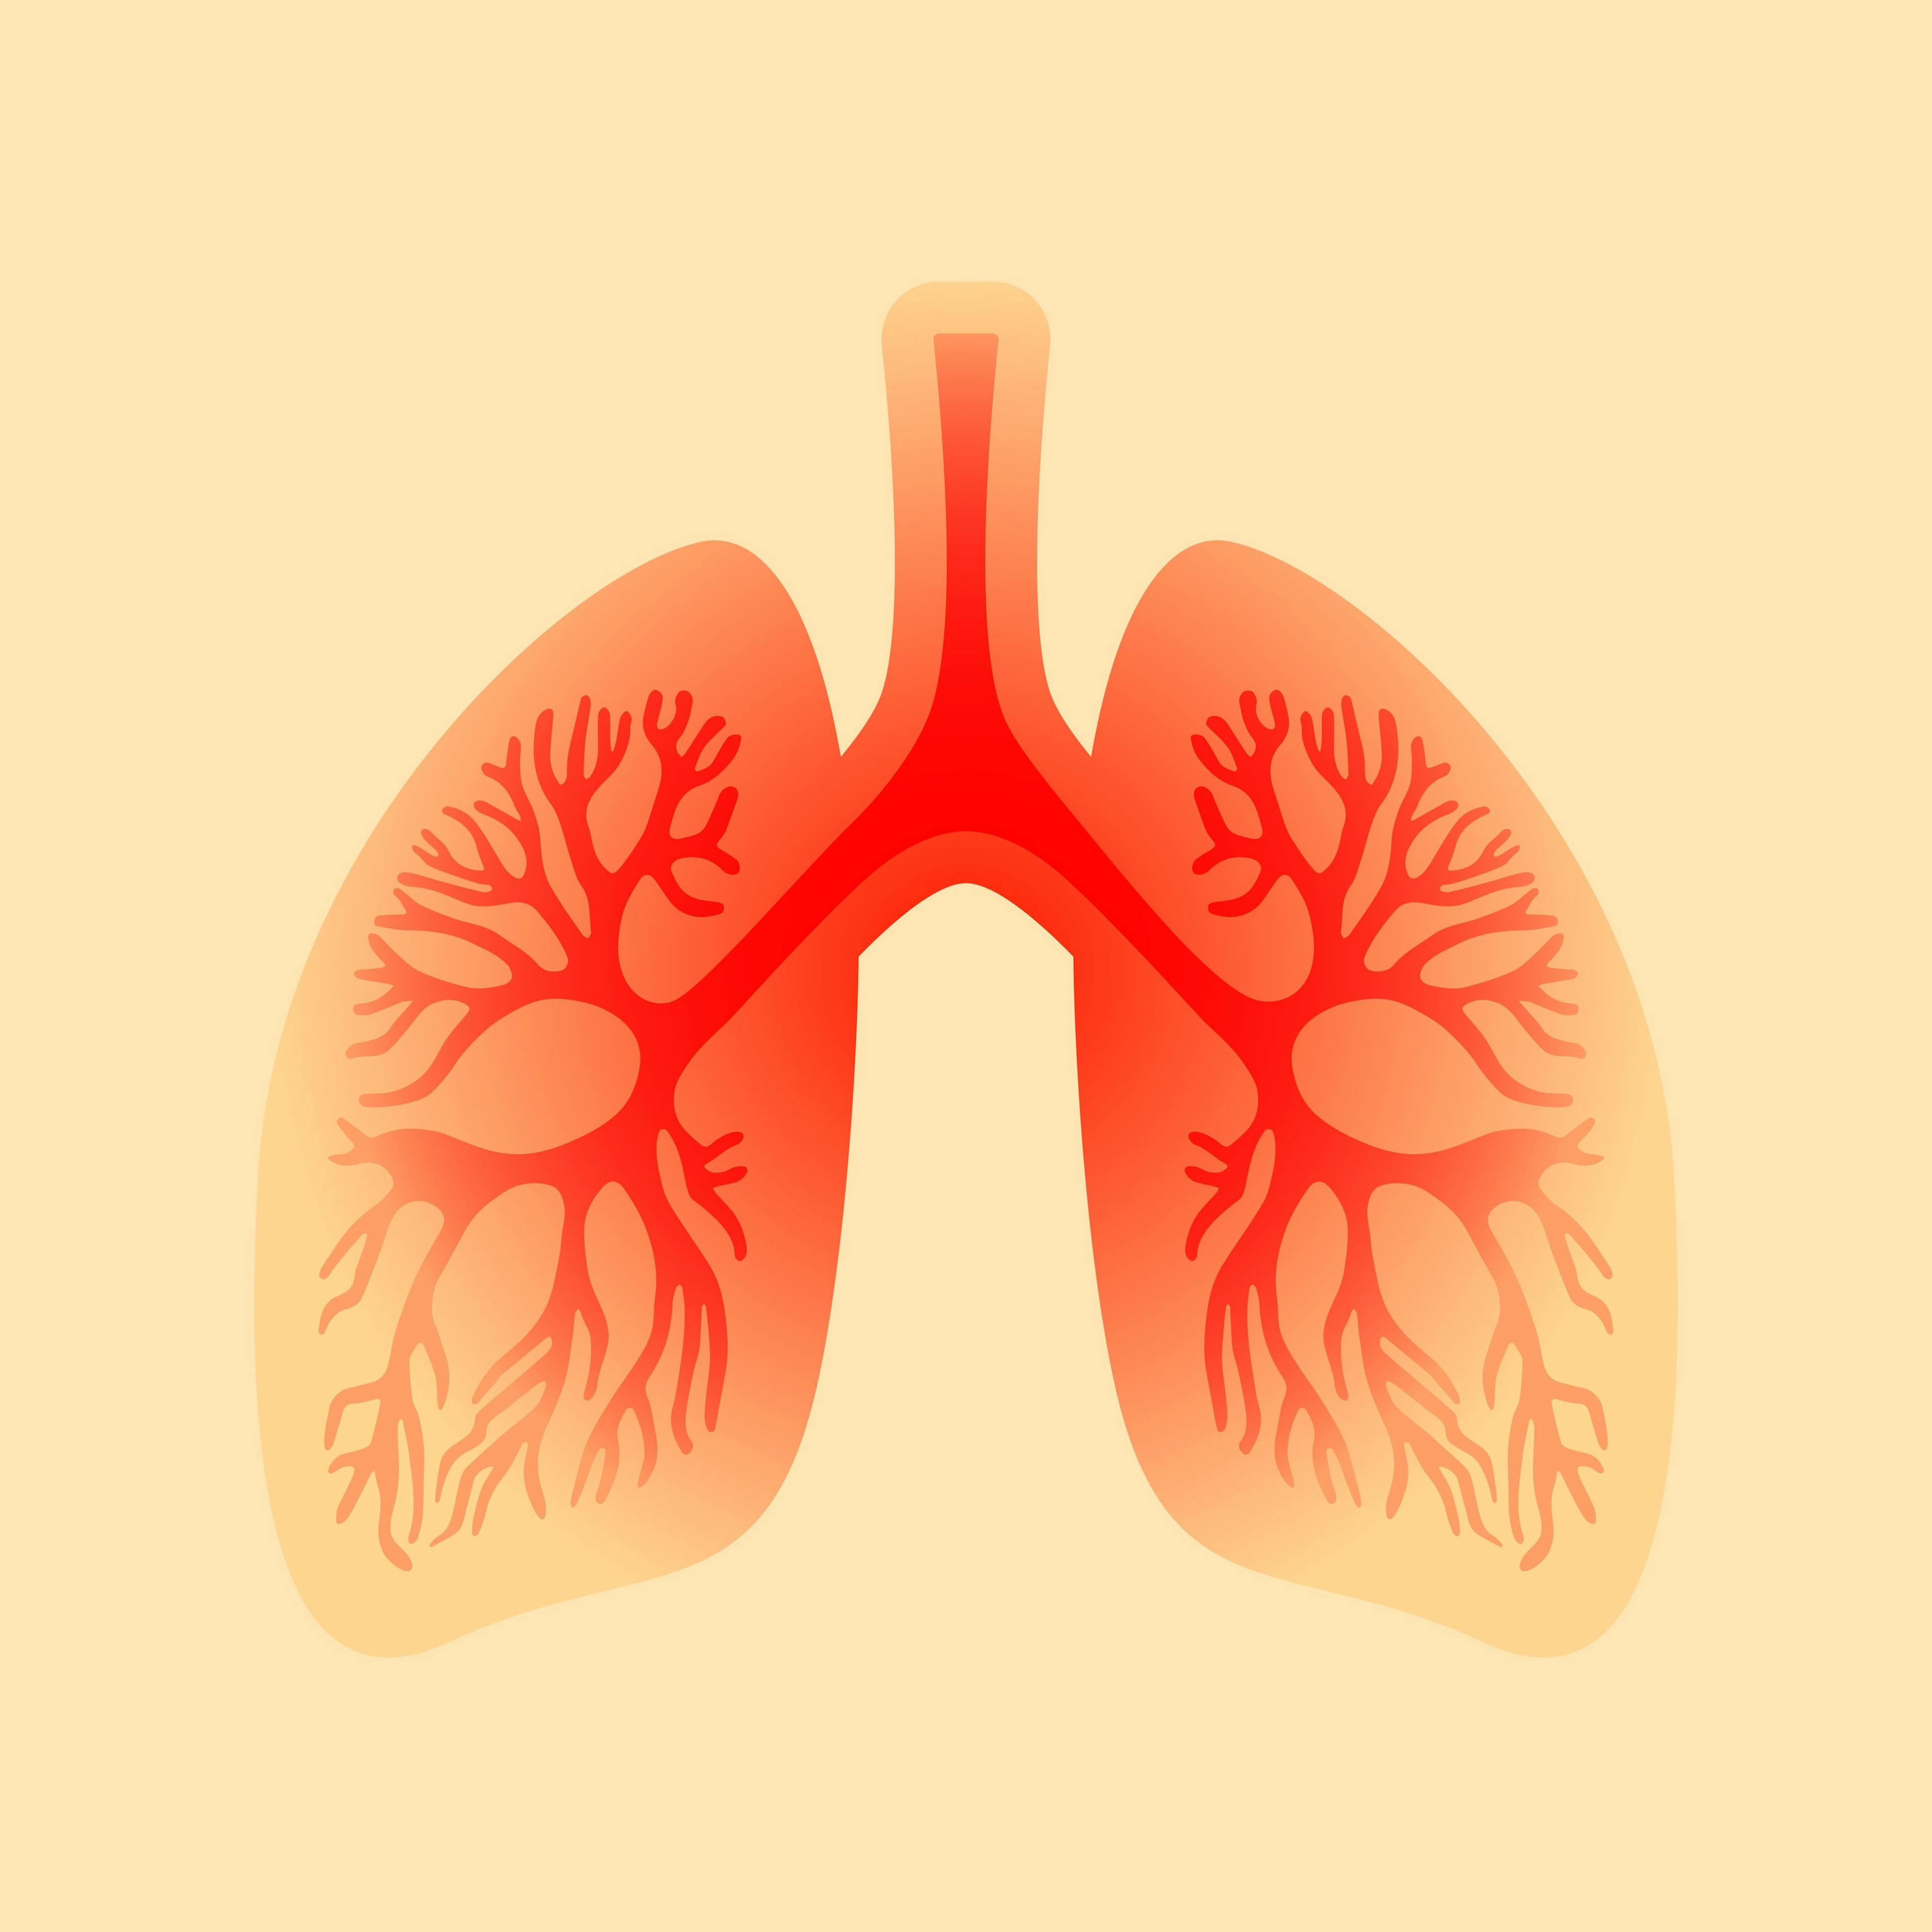 Lung Model | image credit: arcady - stock.adobe.com